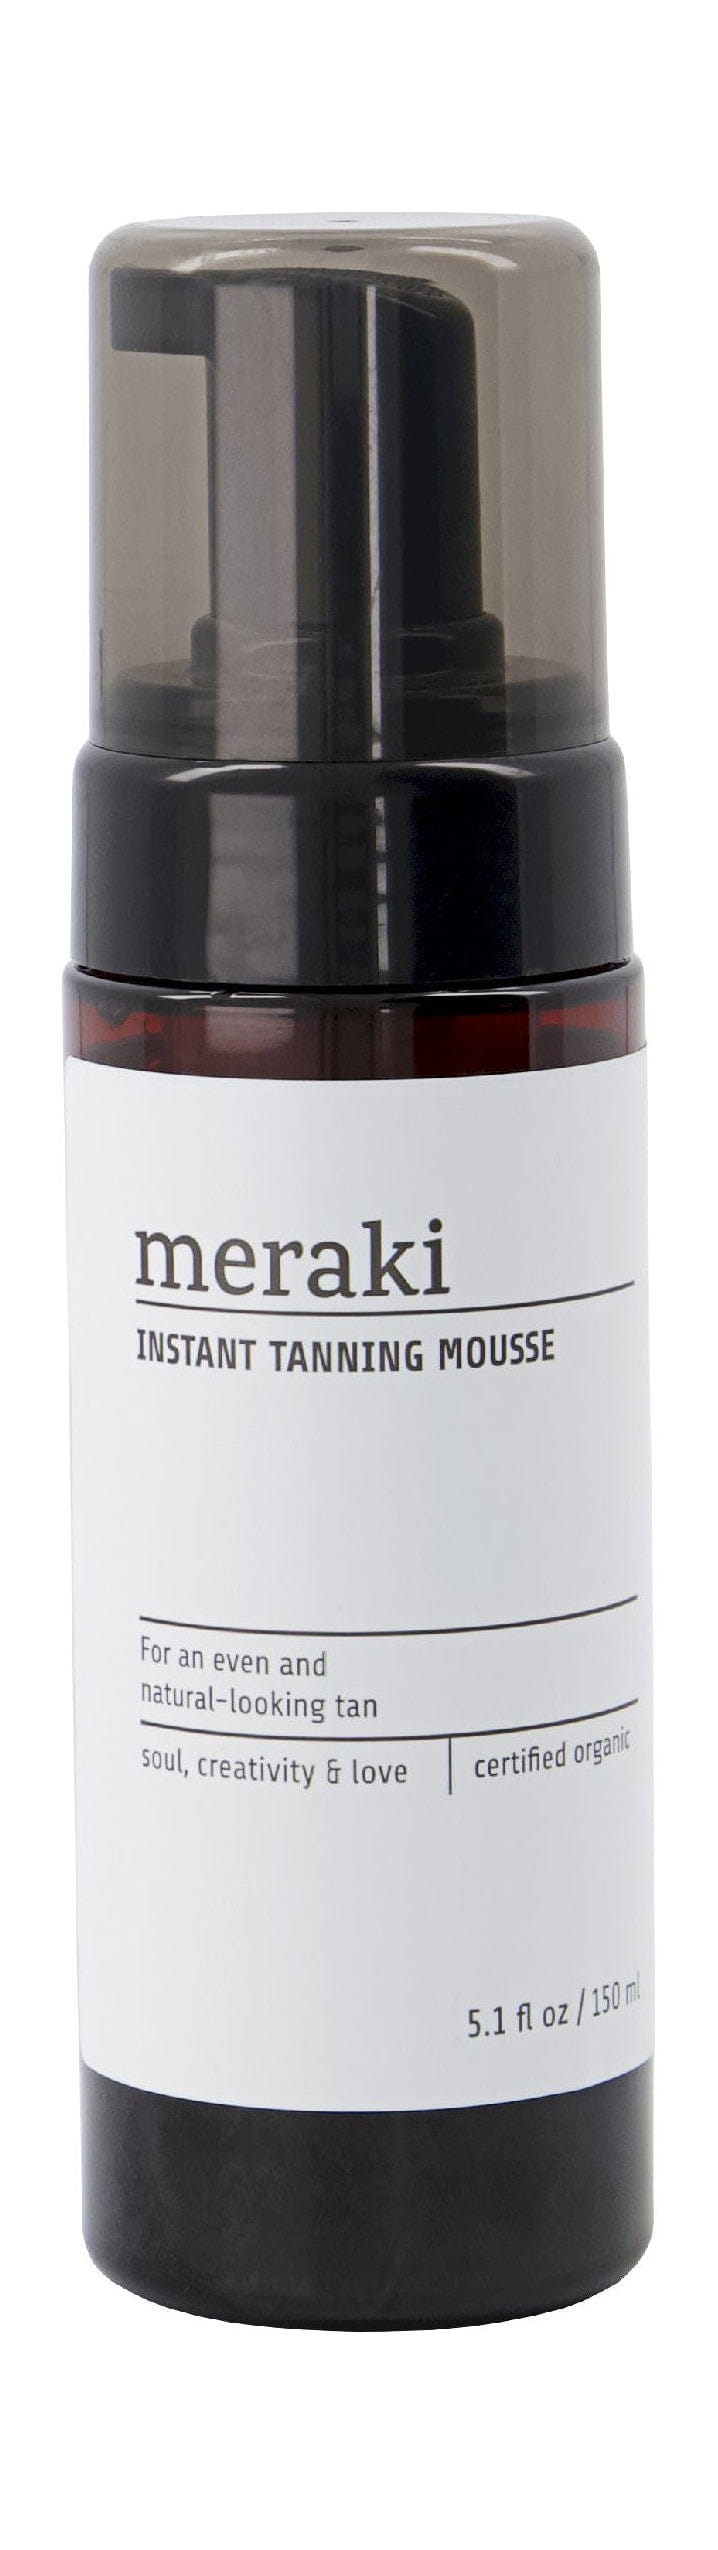 Meraki Instant Tanning Mousse 150 ml, cosmos orgánico